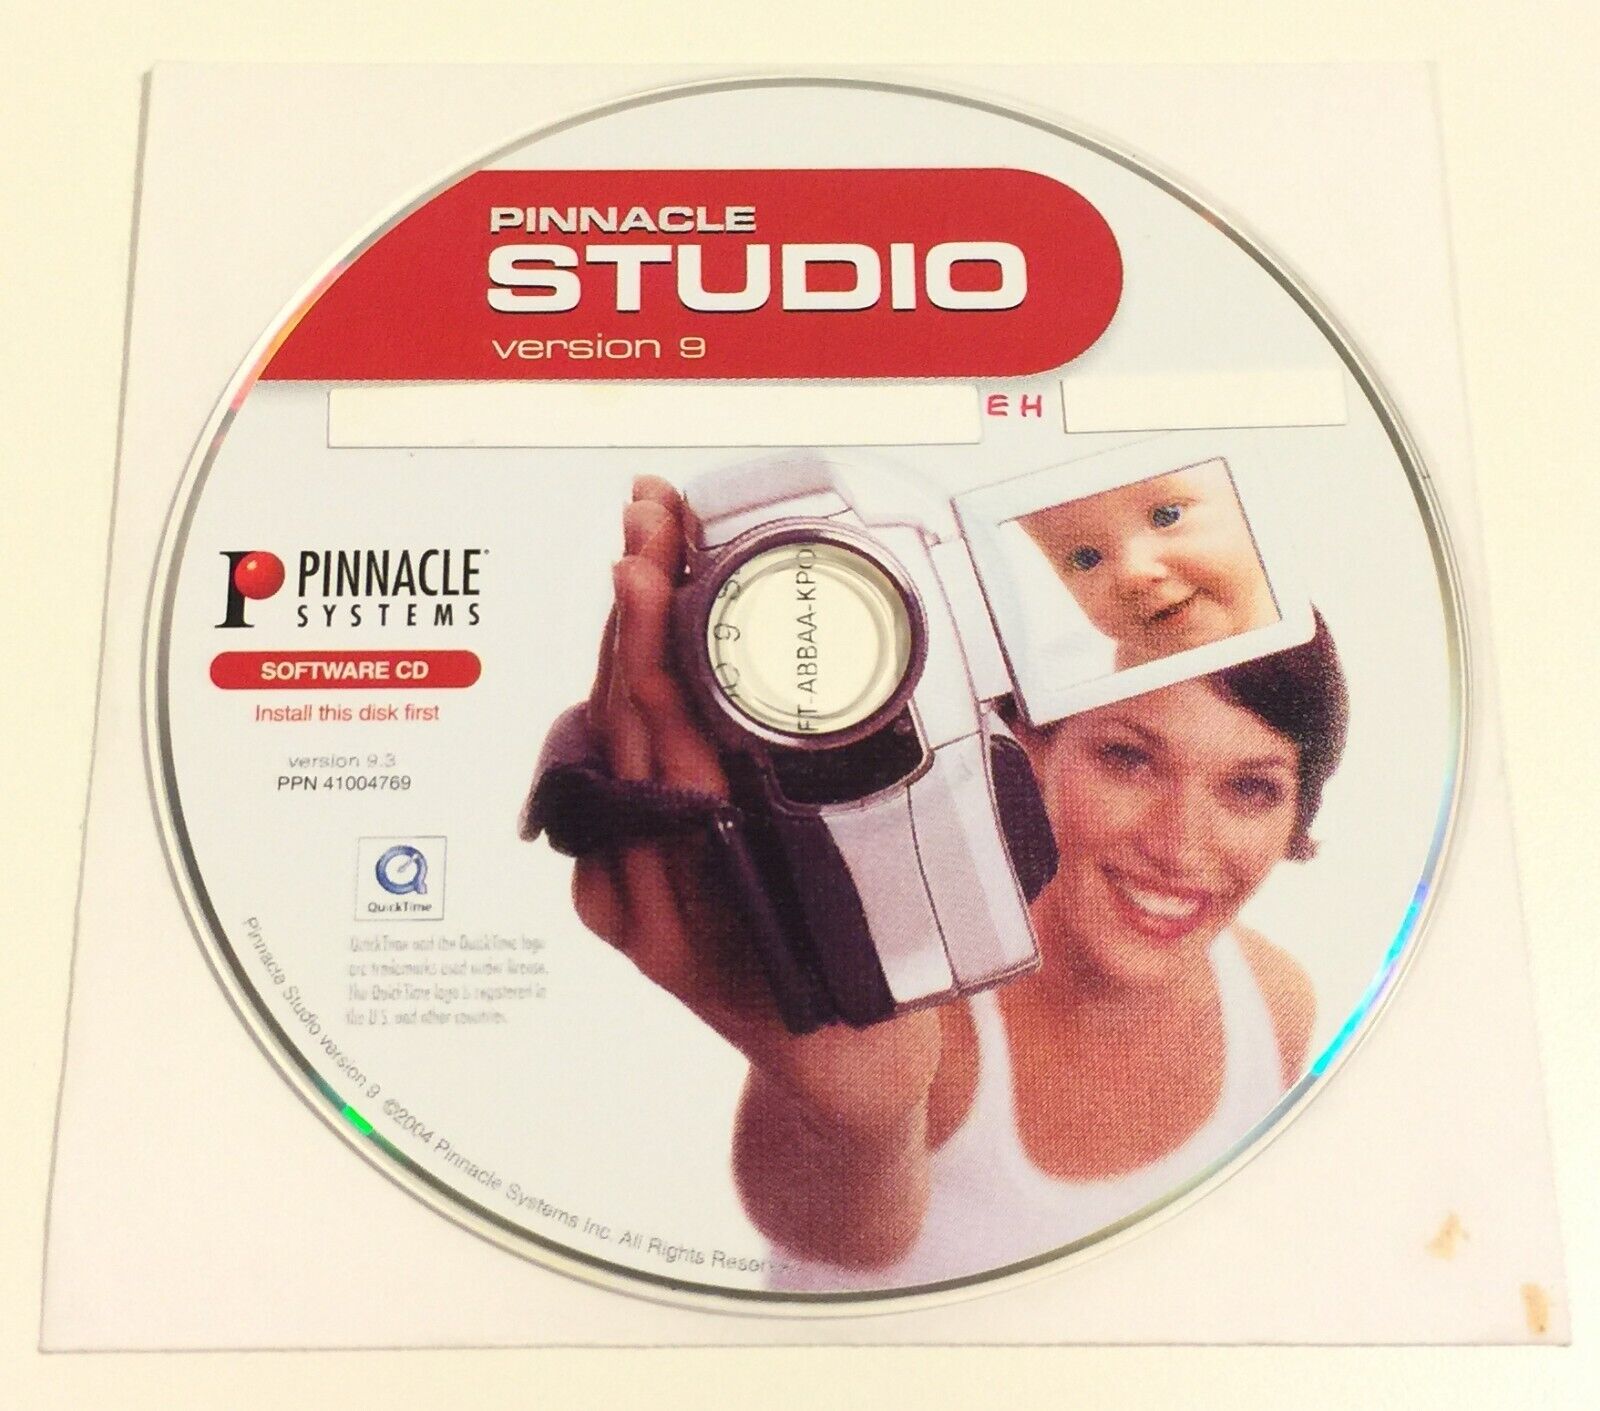 Pinnacle Studio Version 9 - PC CD Rom Software - 2004